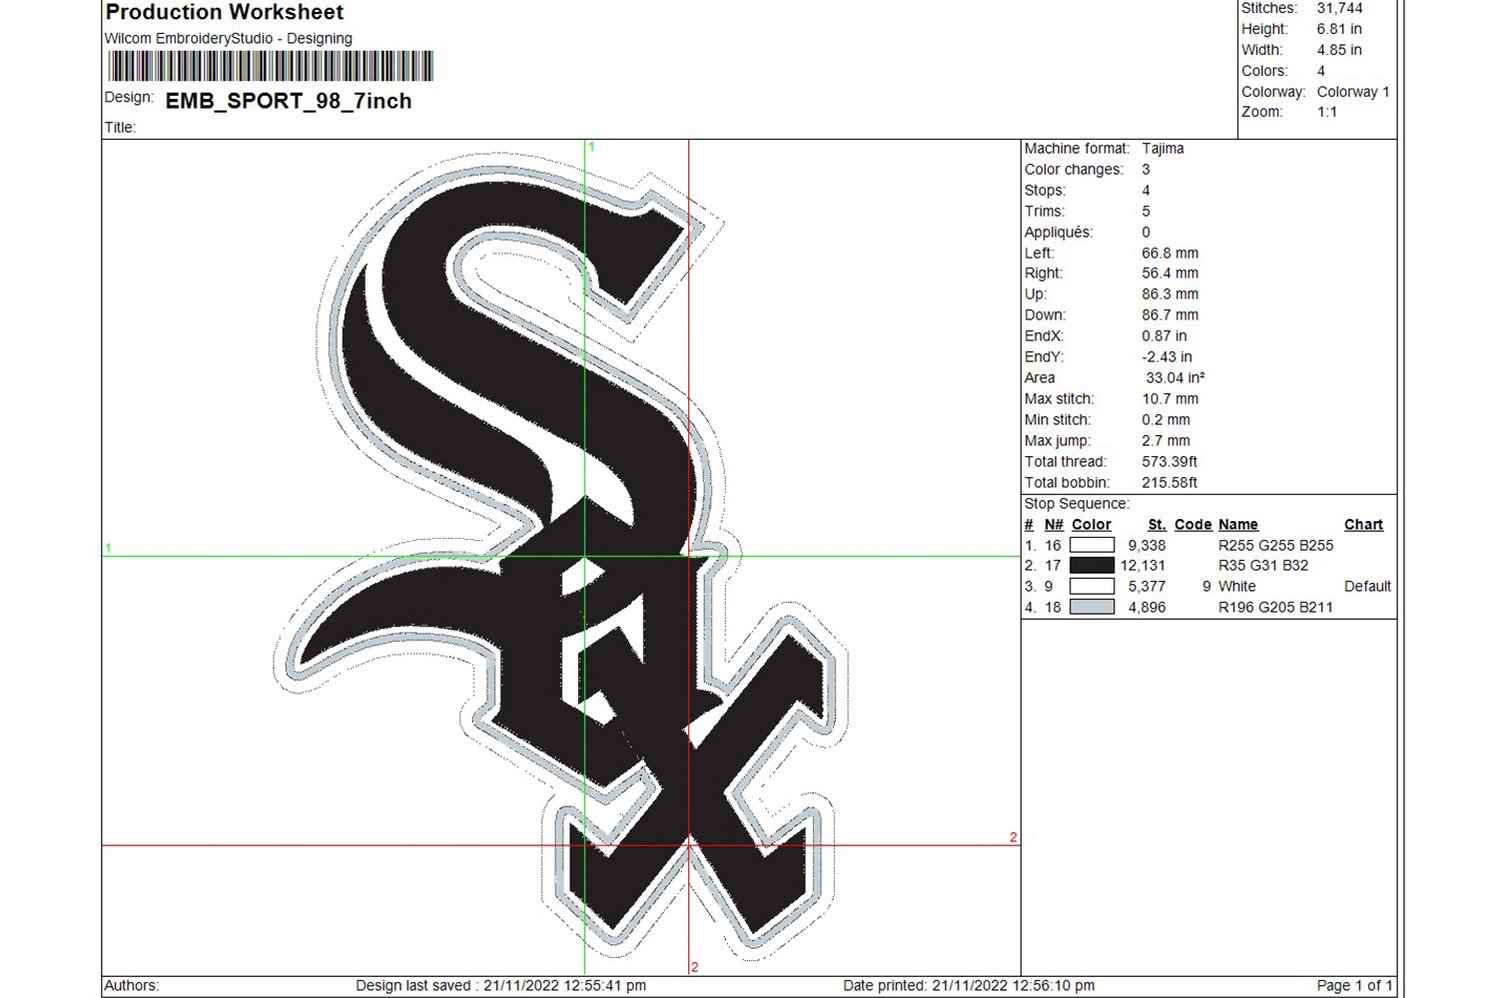 Chicago White Sox SVG Bundle, White Sox, Chicago, Baseball, Mlb